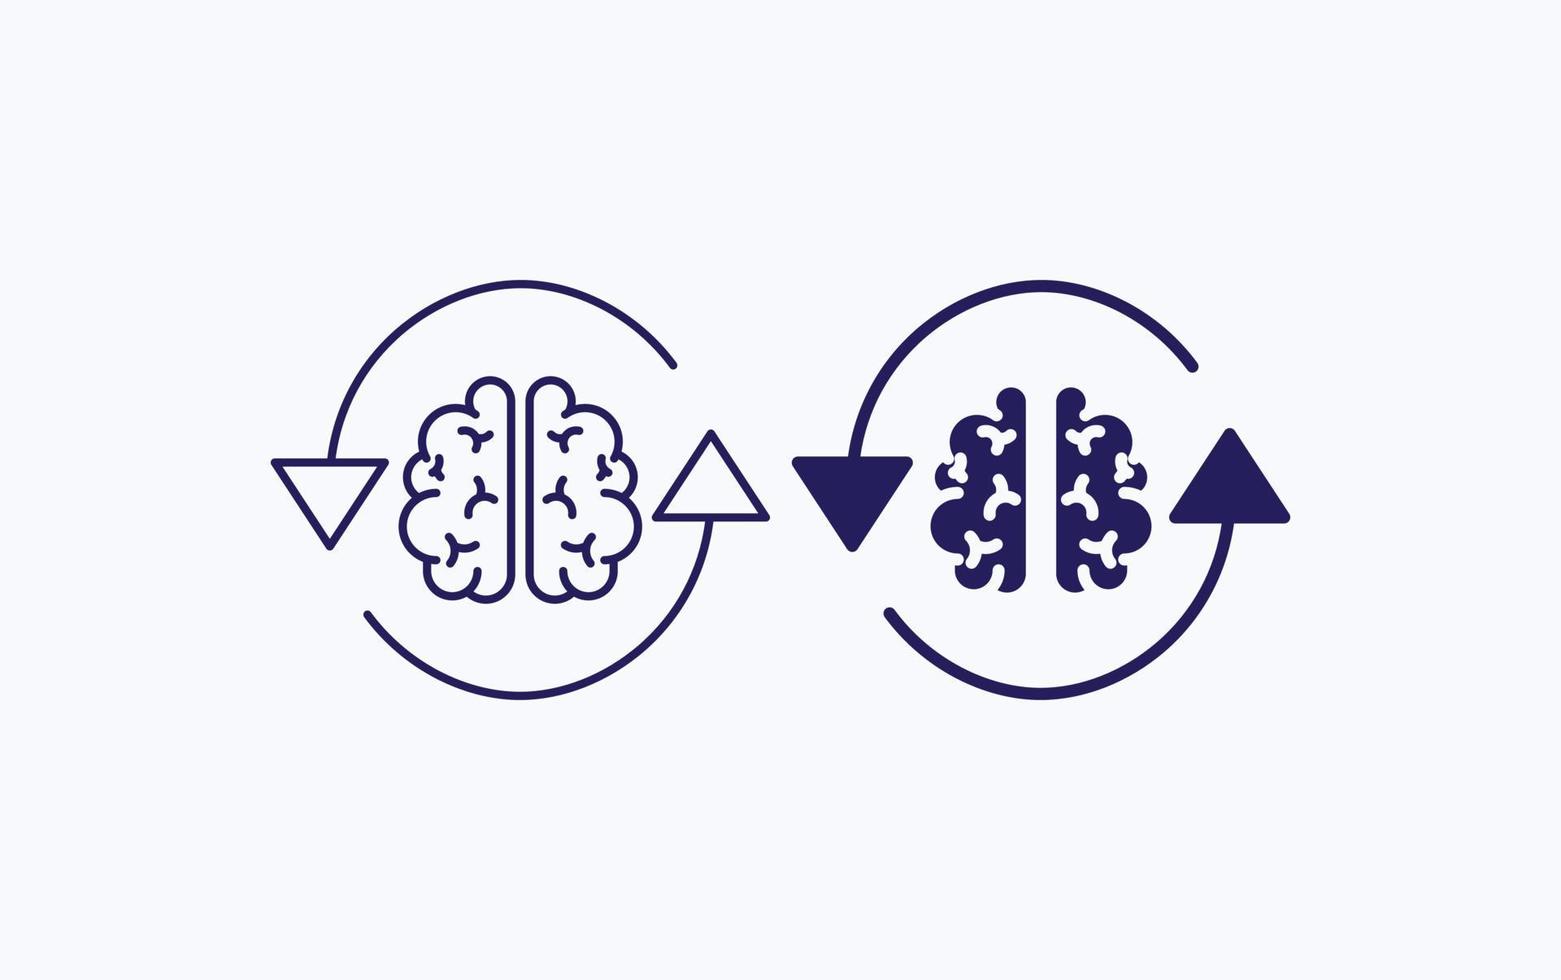 Human Brain refresh illustration icon vector